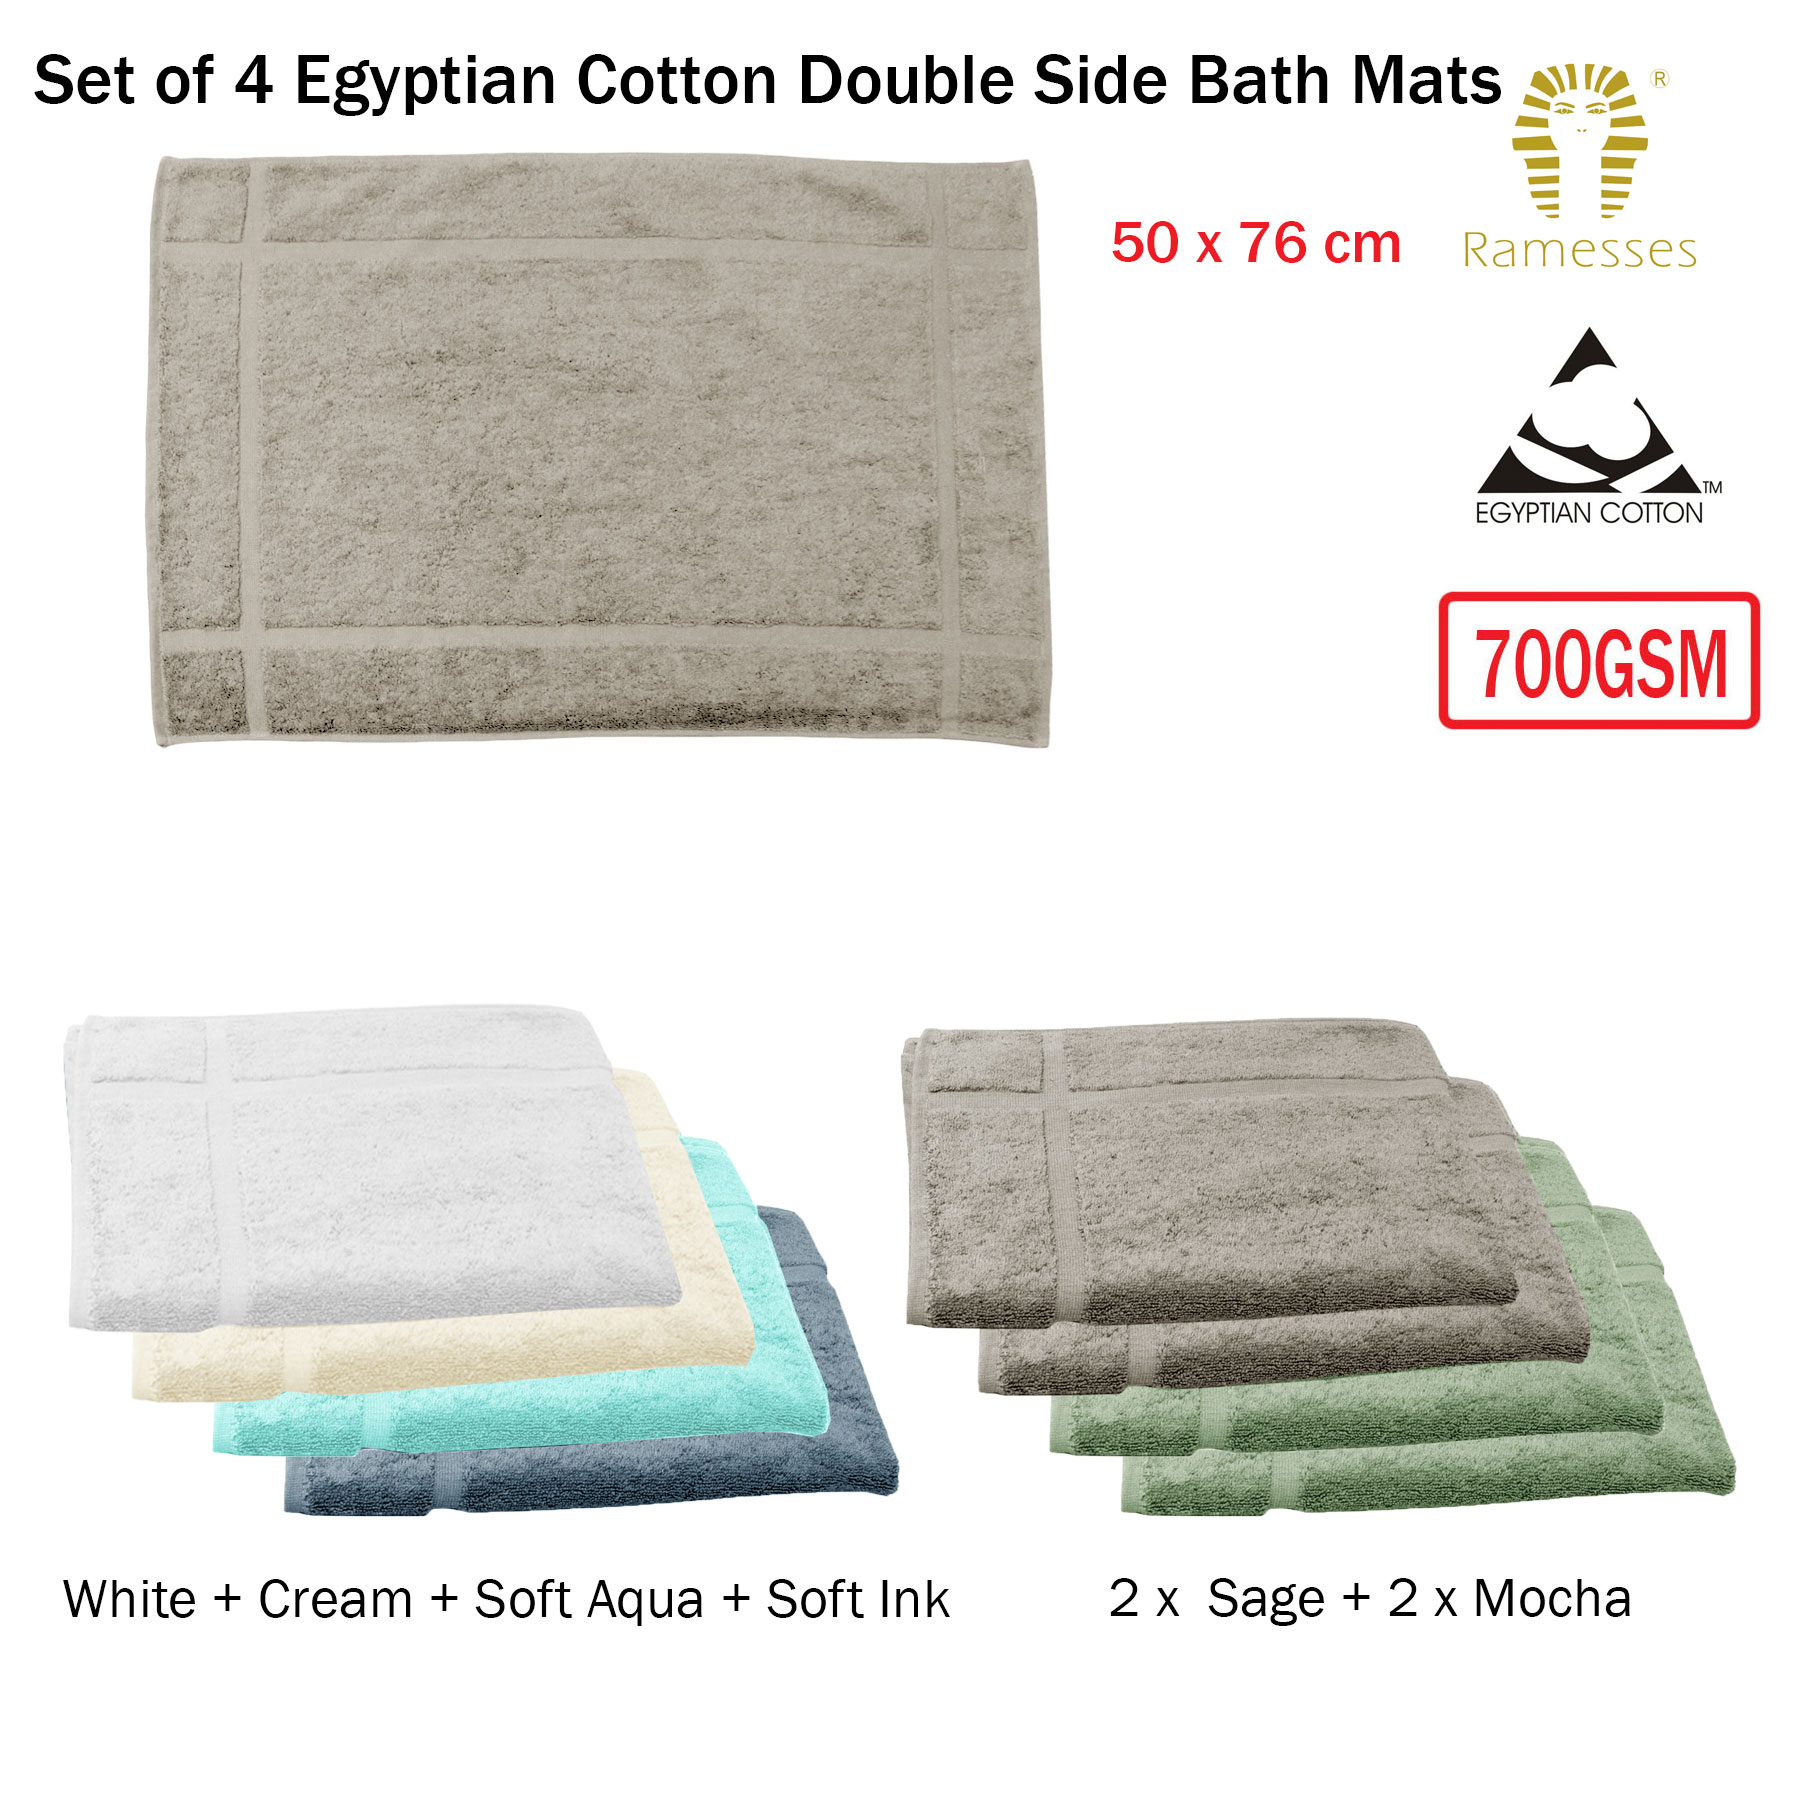 Set of 3 Egyptian Cotton Double Side Bath Mats 50 x 76 cm by Ramesses 